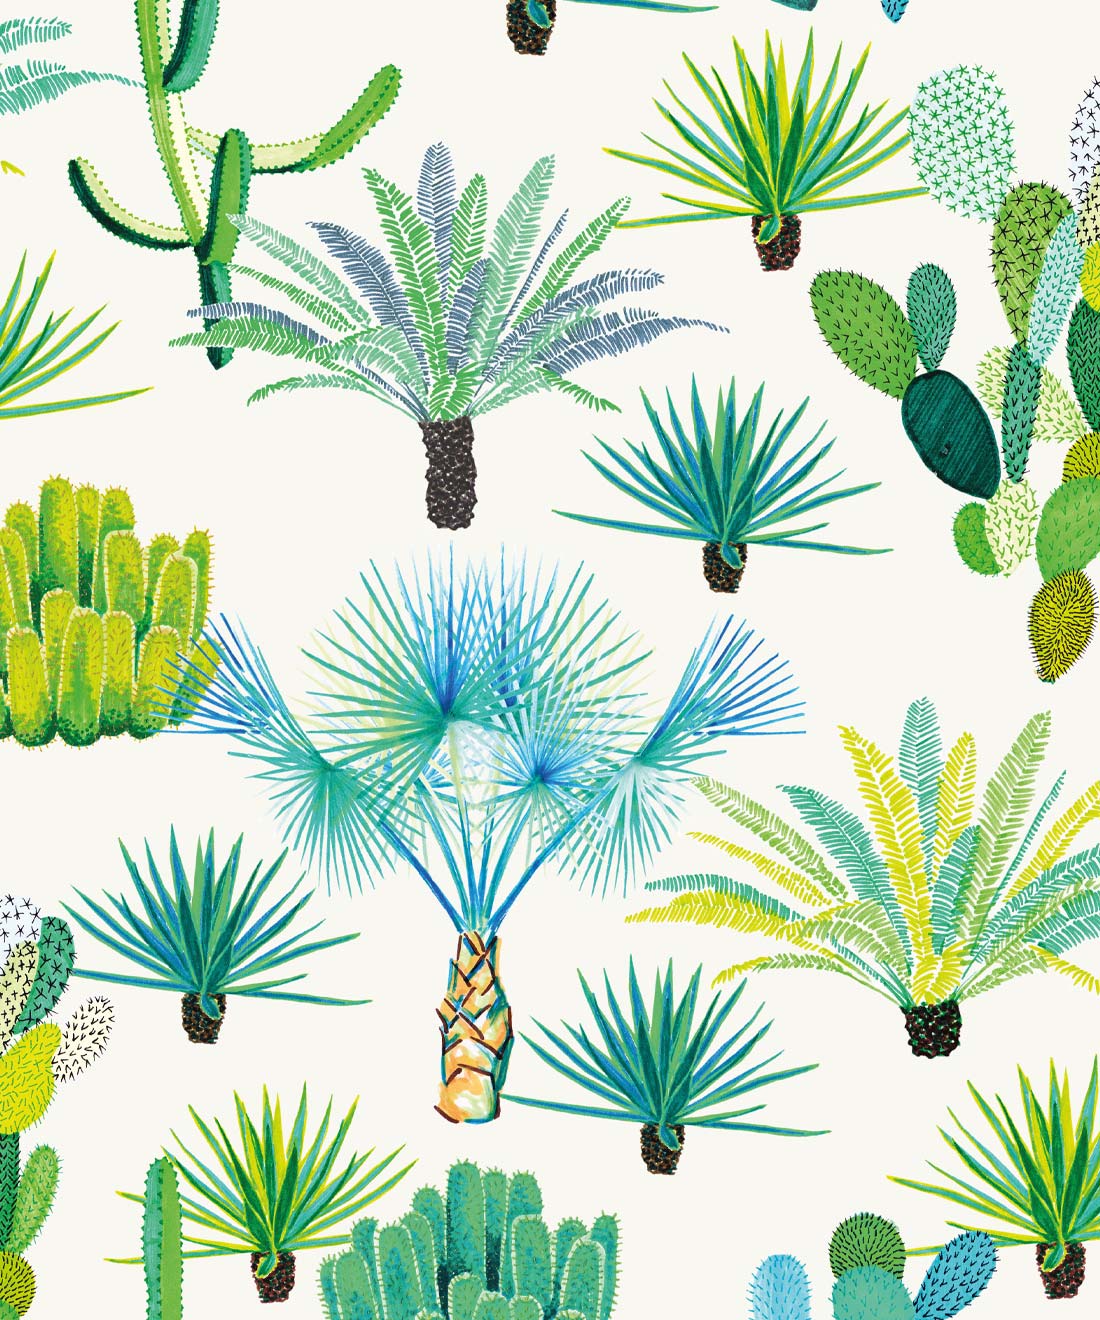 44000 Cactus Wallpaper Pictures